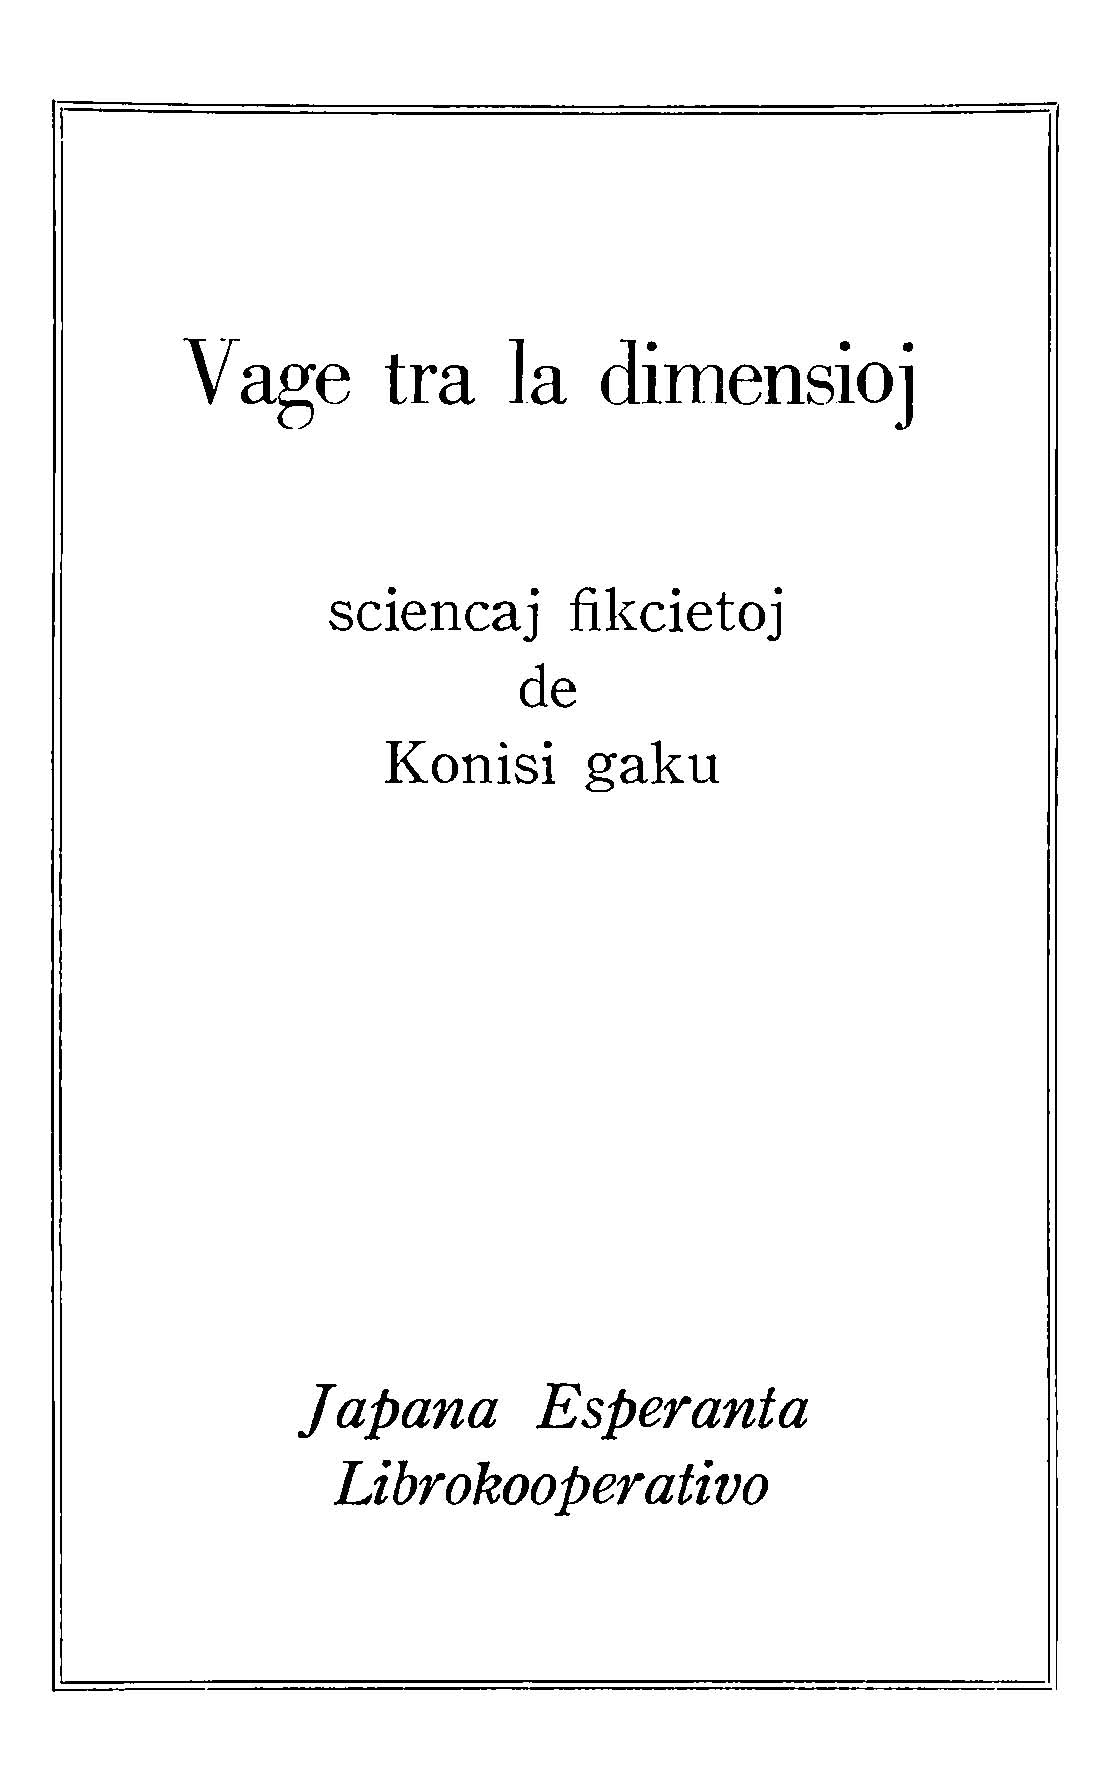 libro/vage02.jpg